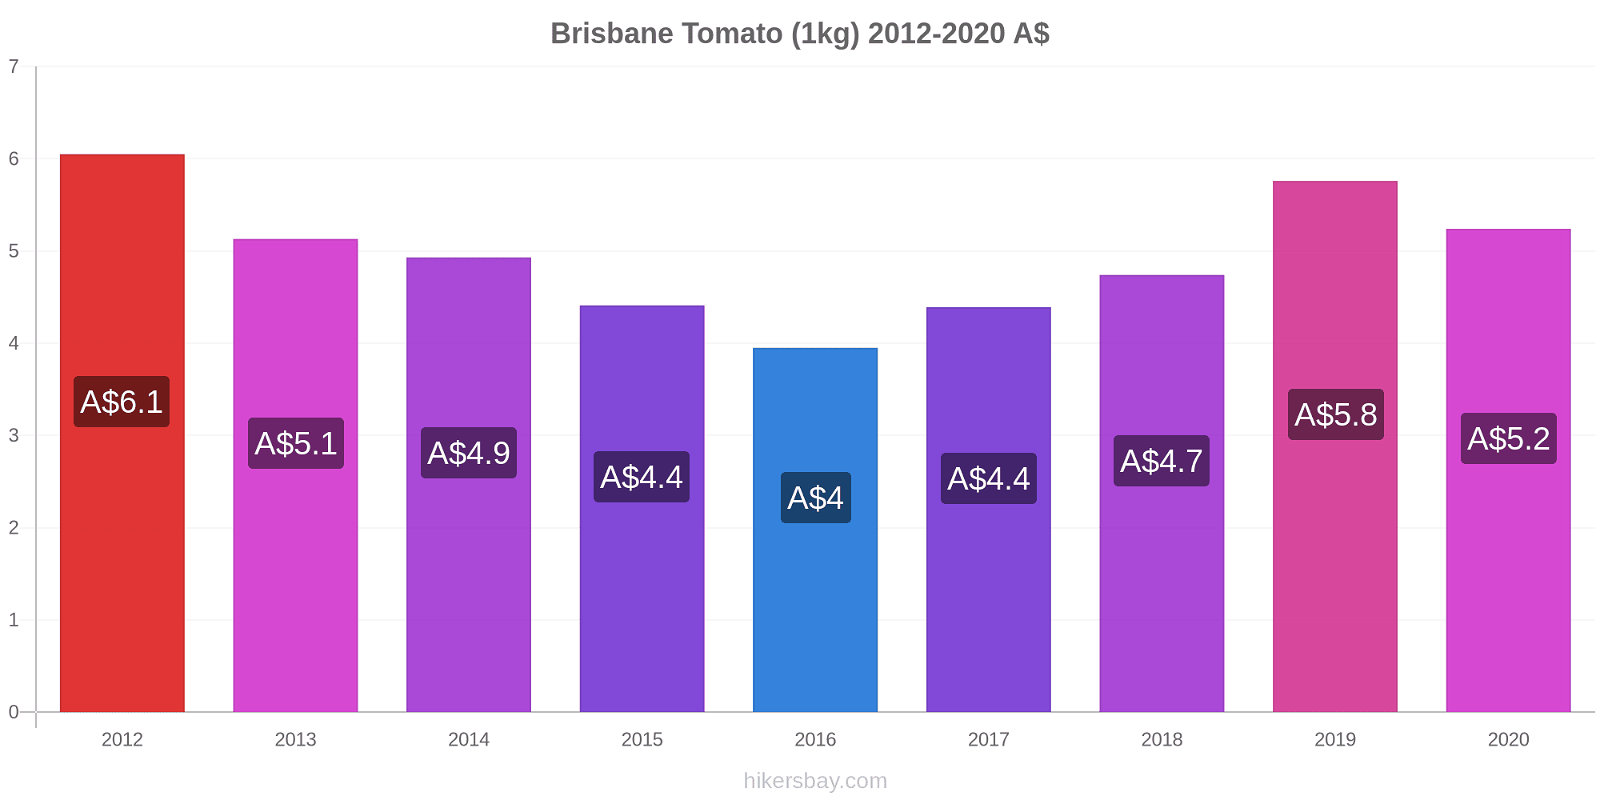 Brisbane price changes Tomato (1kg) hikersbay.com